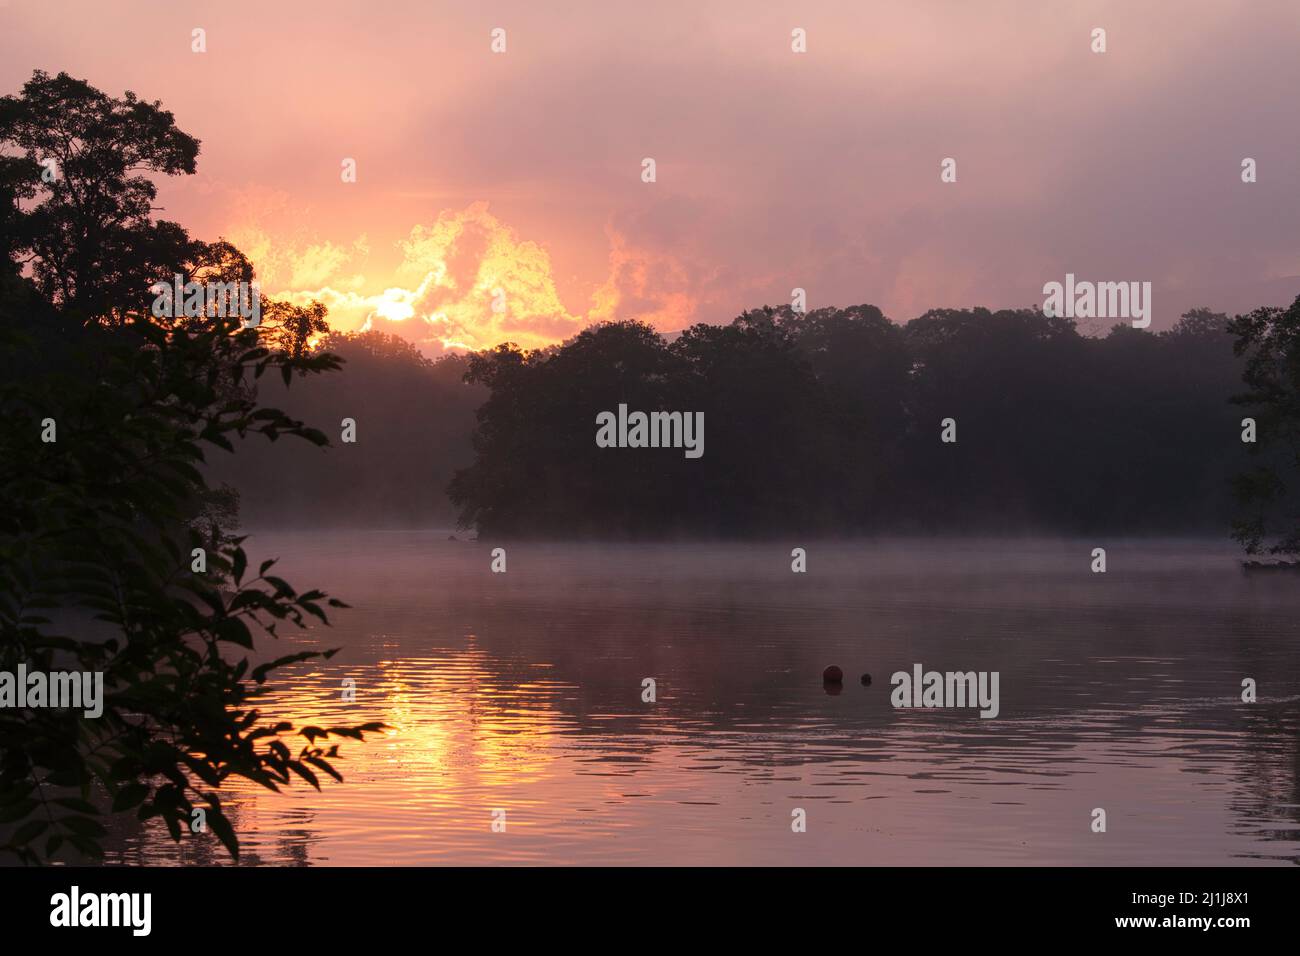 Explosive orange sunrise over a calm lake Stock Photo